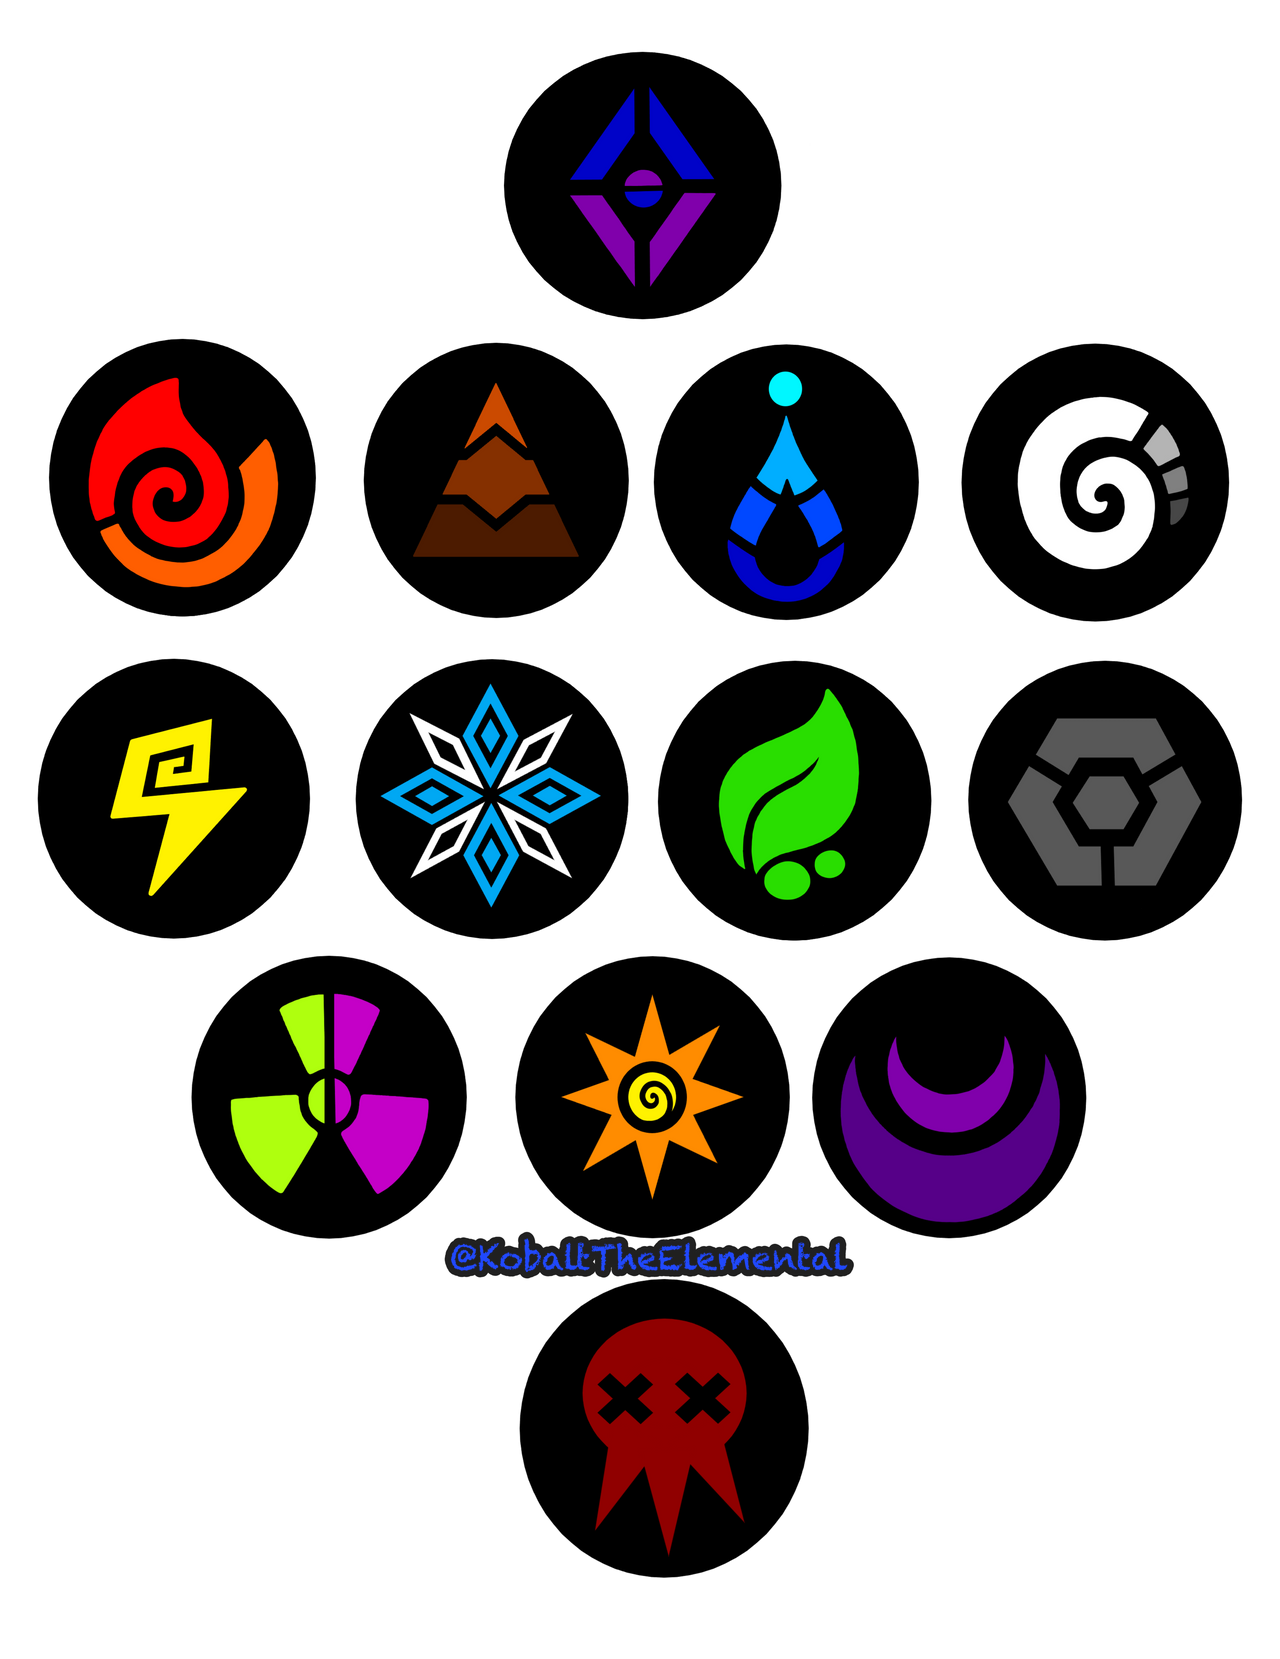 Pokemon Type Symbols by ILKCMP on DeviantArt